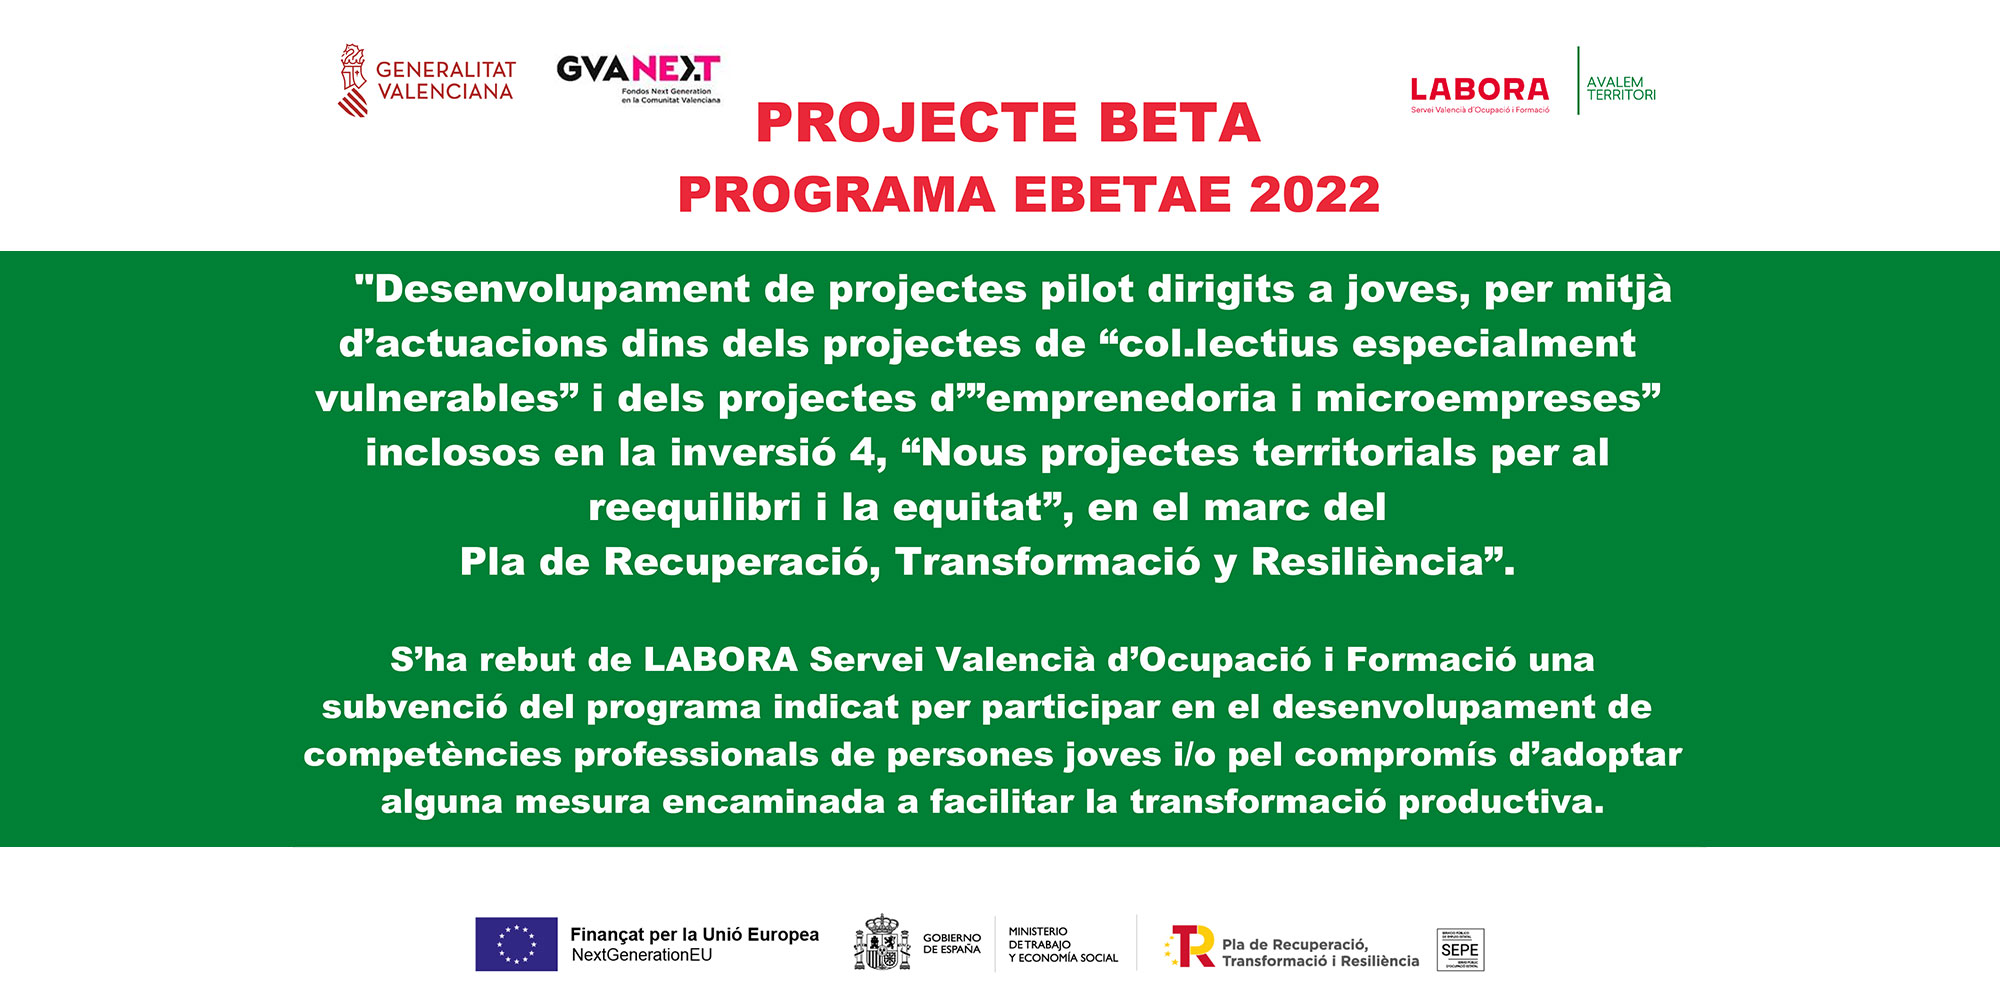 Programa EBETAE 2022 - Labora